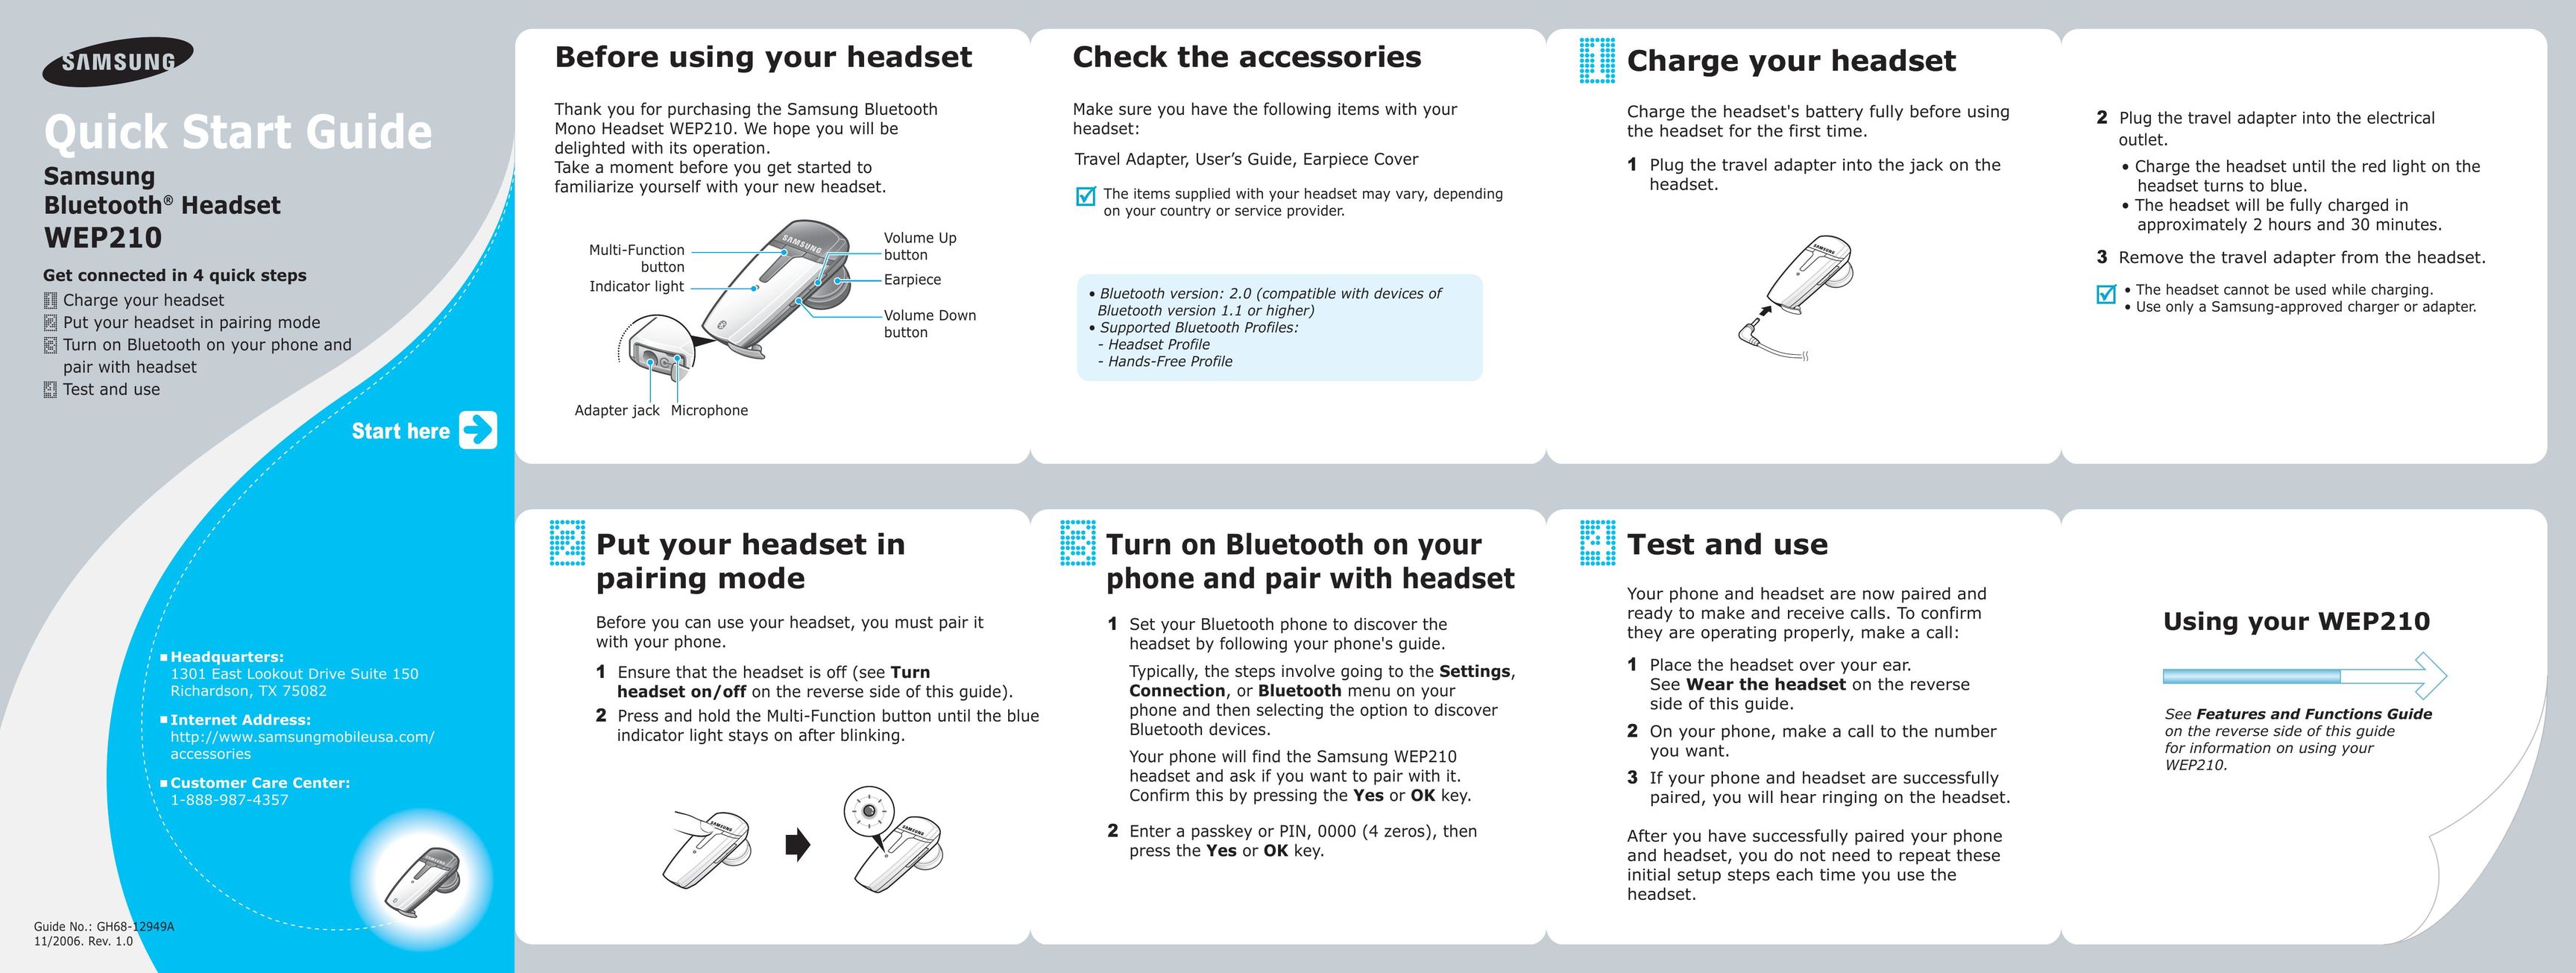 Samsung WEP 210 Bluetooth Headset User Manual